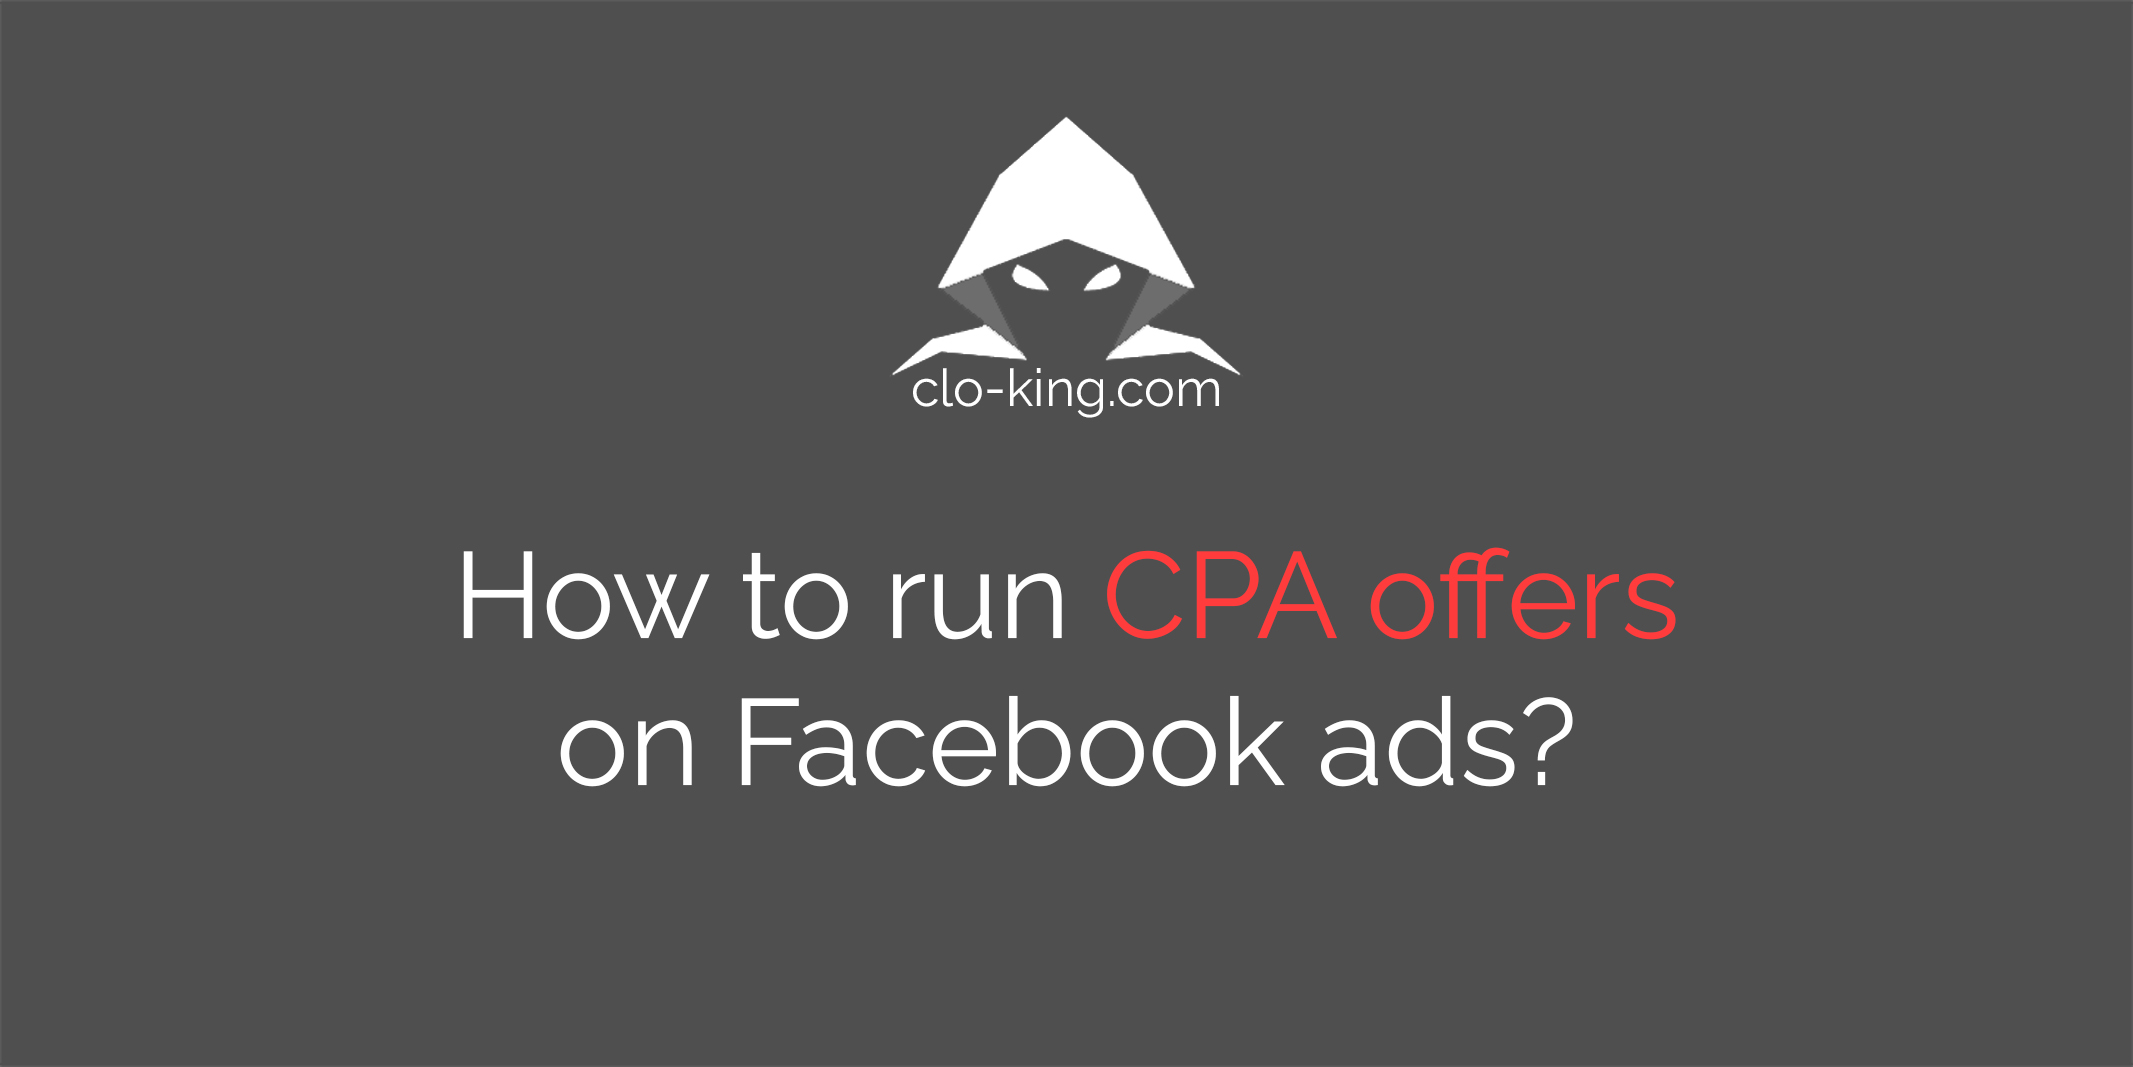 cpa-offers-facebook-jpg.33070